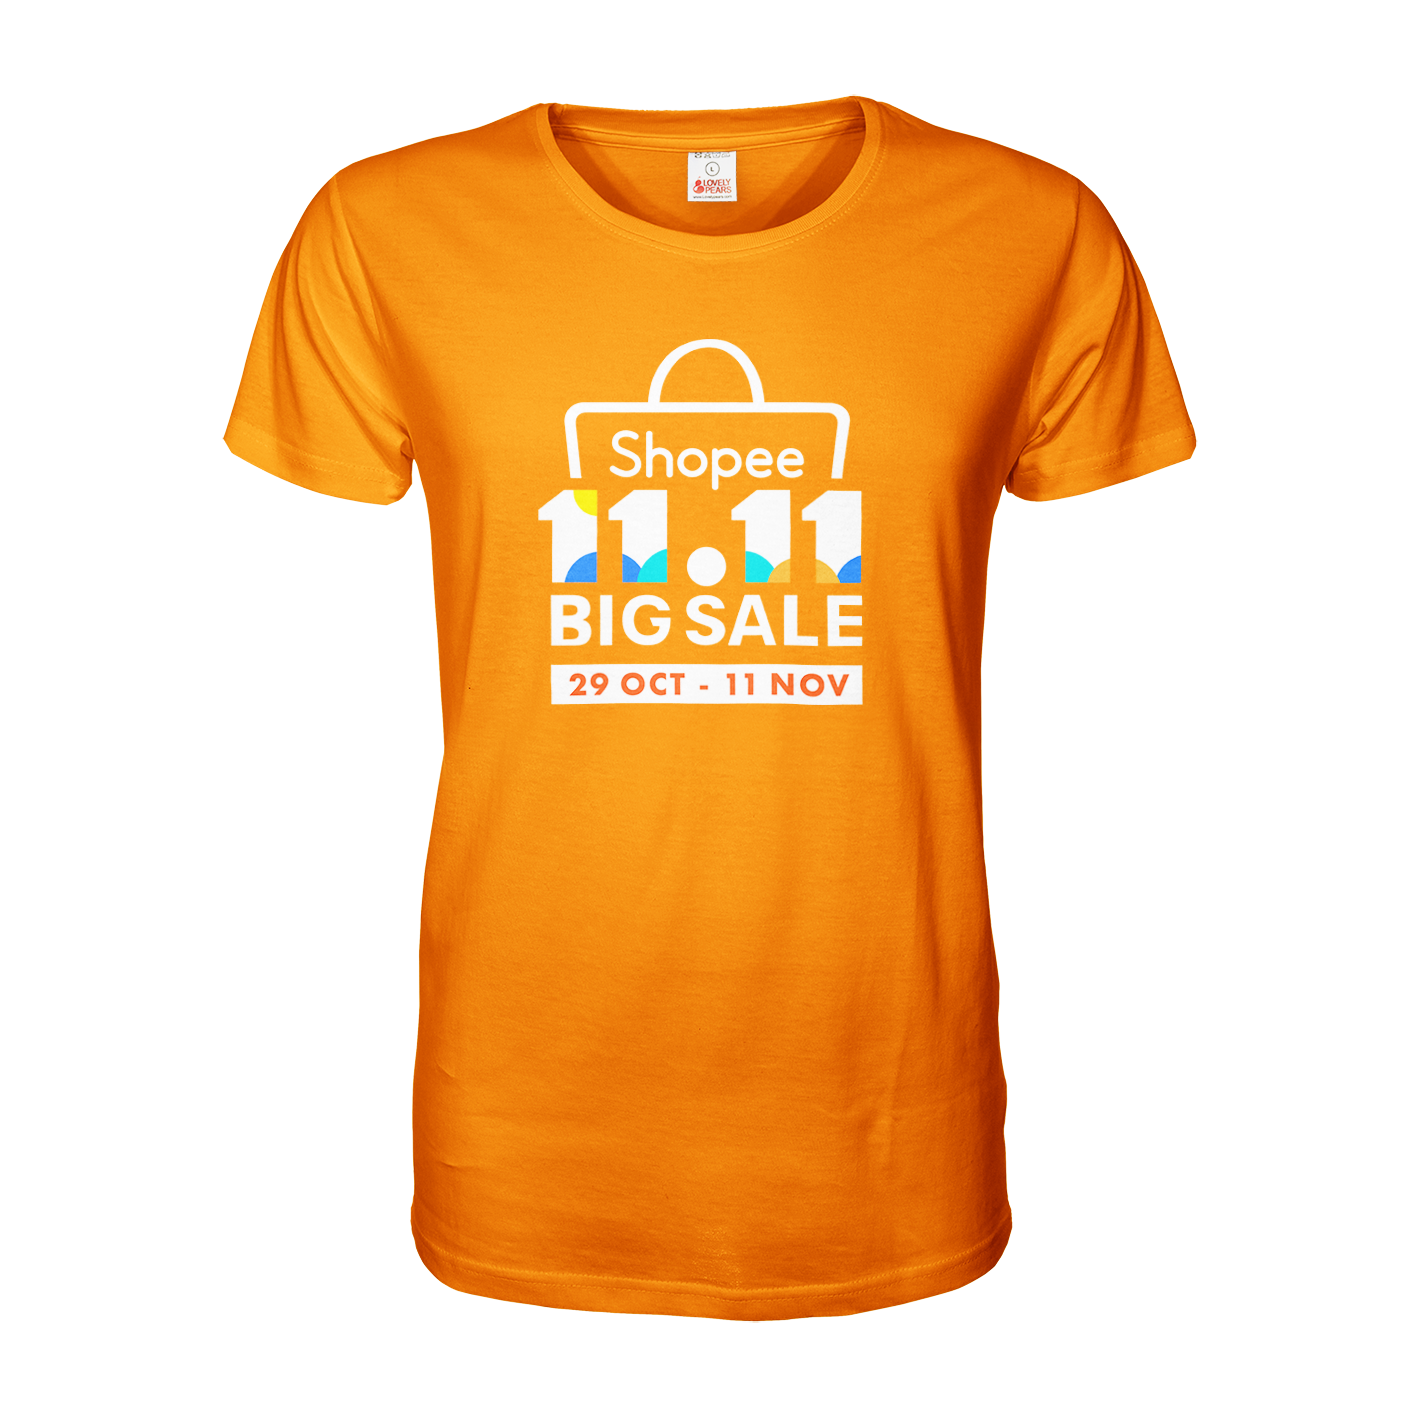 Orange tee shirt with A3 Shopee print